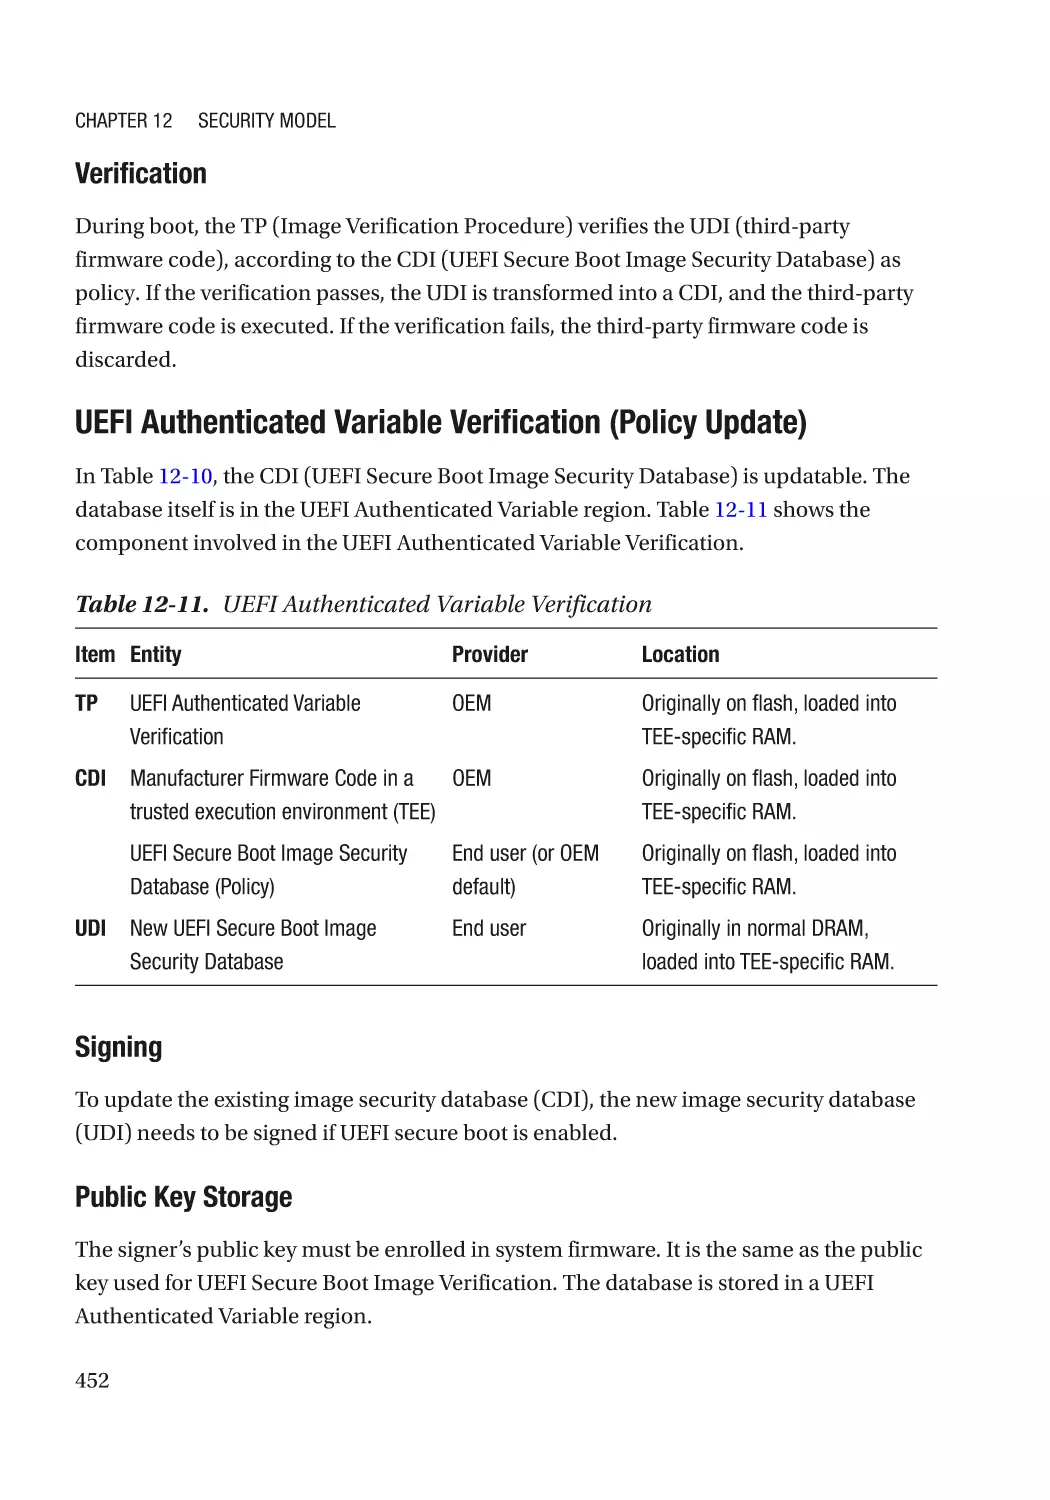 Verification
UEFI Authenticated Variable Verification (Policy Update)
Signing
Public Key Storage